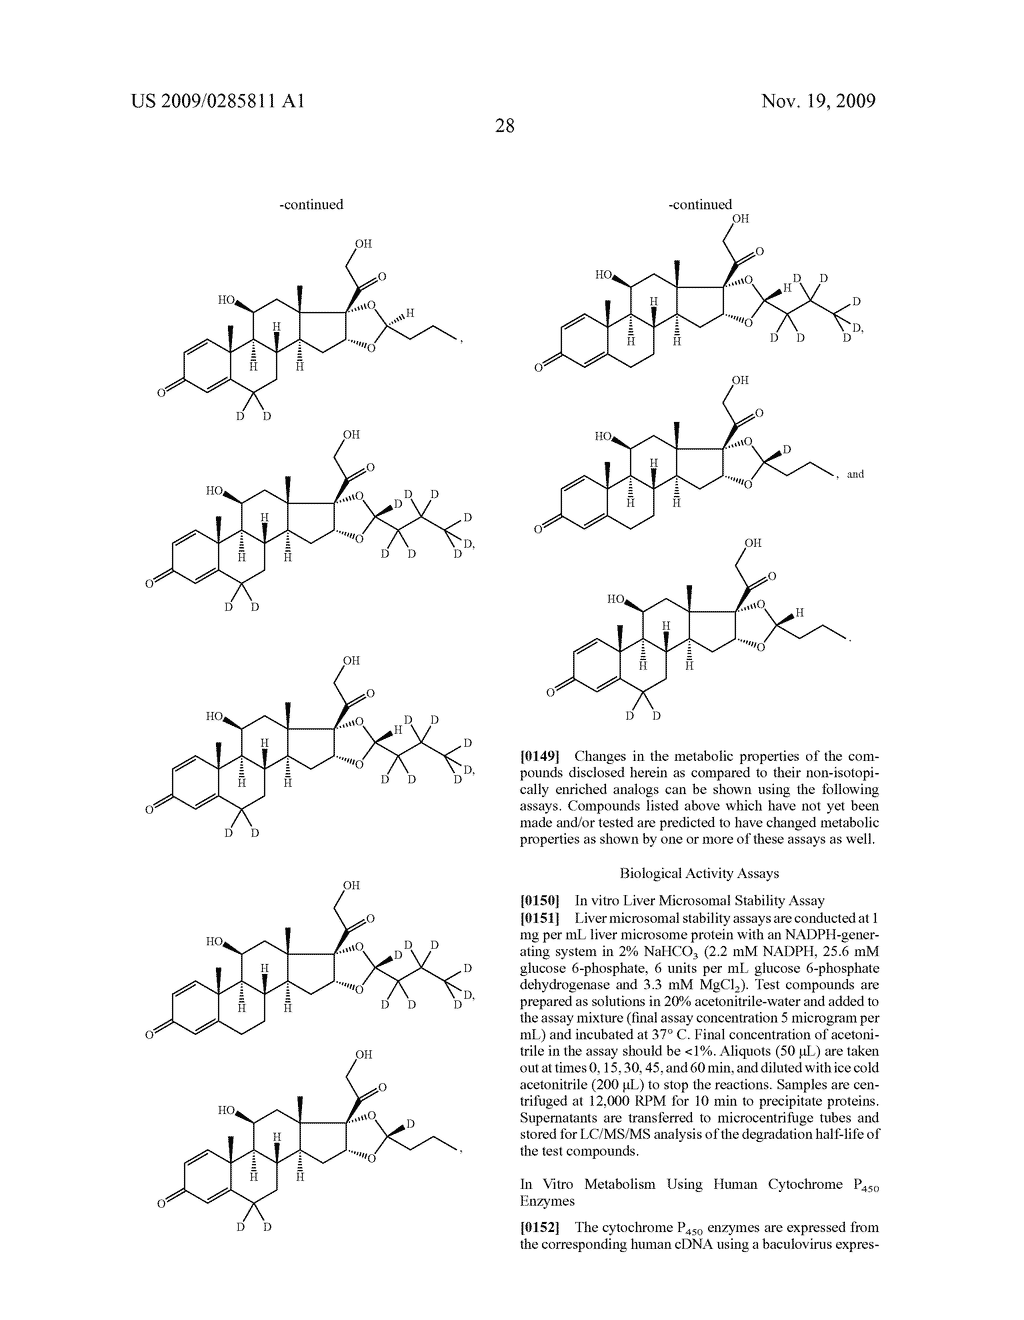 ANTI-INFLAMMATORY AND IMMUNOSUPPRESSIVE GLUCOCORTICOID STEROIDS - diagram, schematic, and image 29